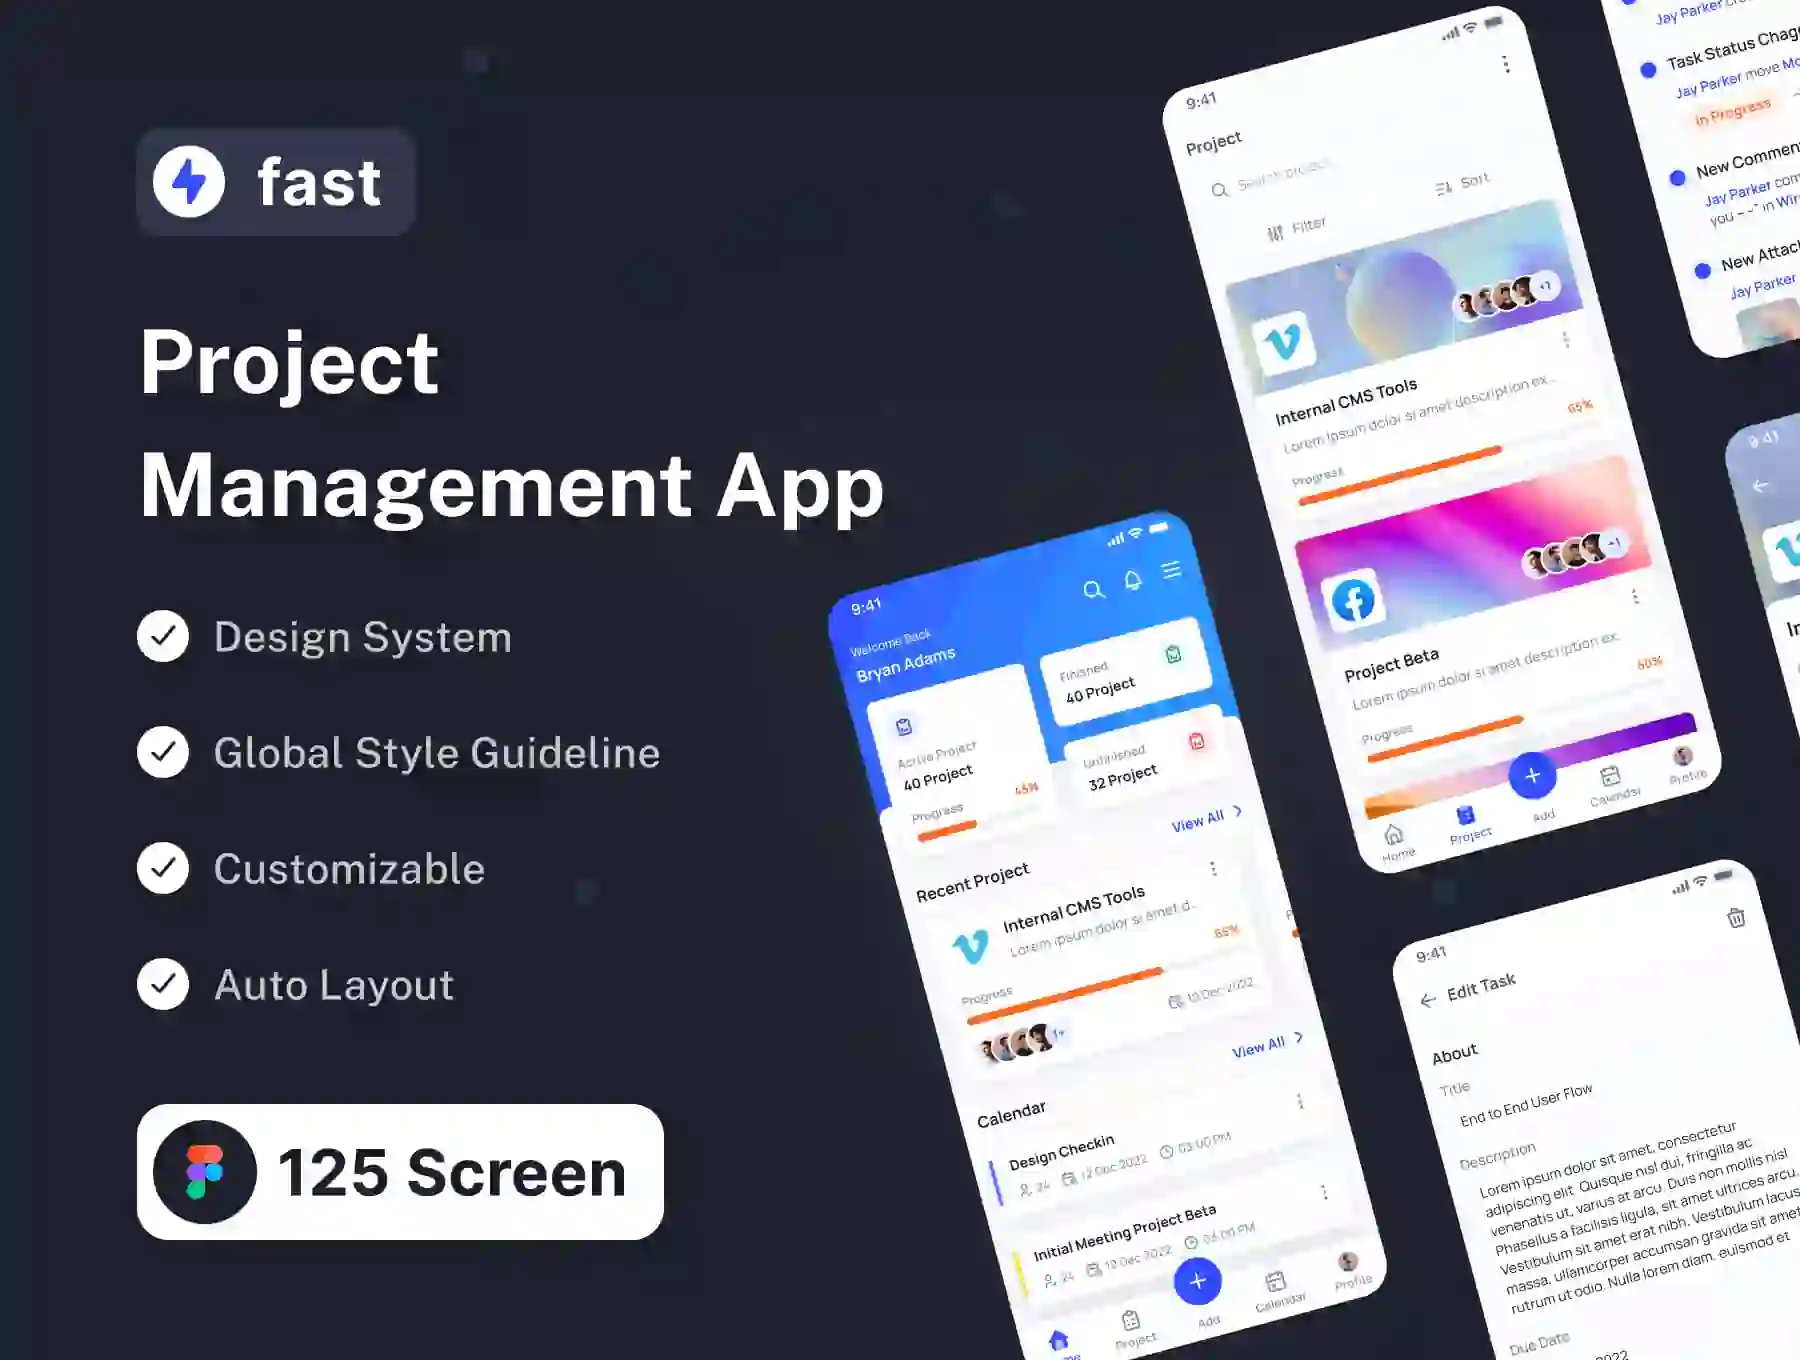 Fast Project Management App